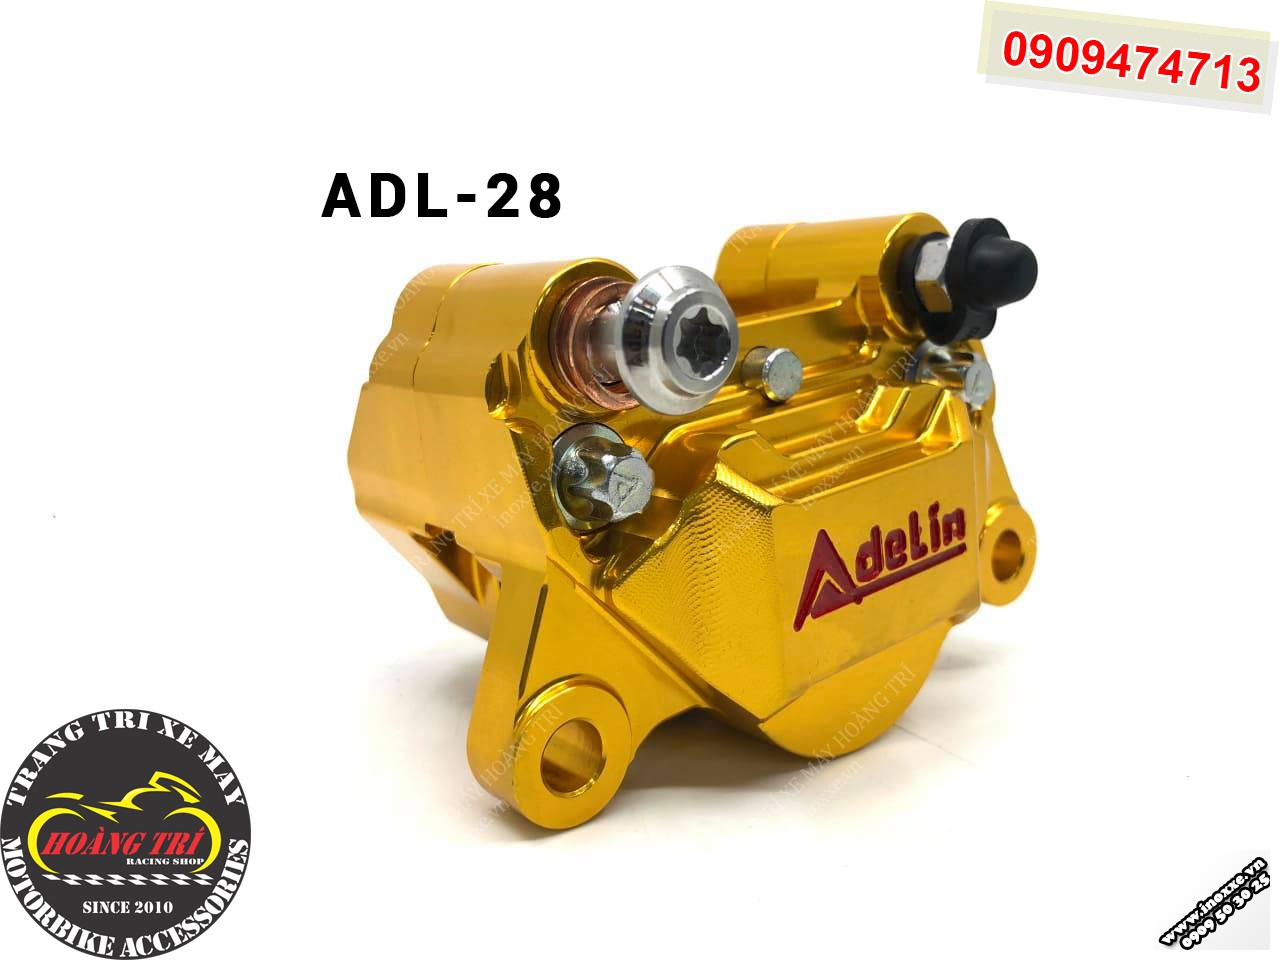 Heo dầu Adelin 2 pis - ADL 28